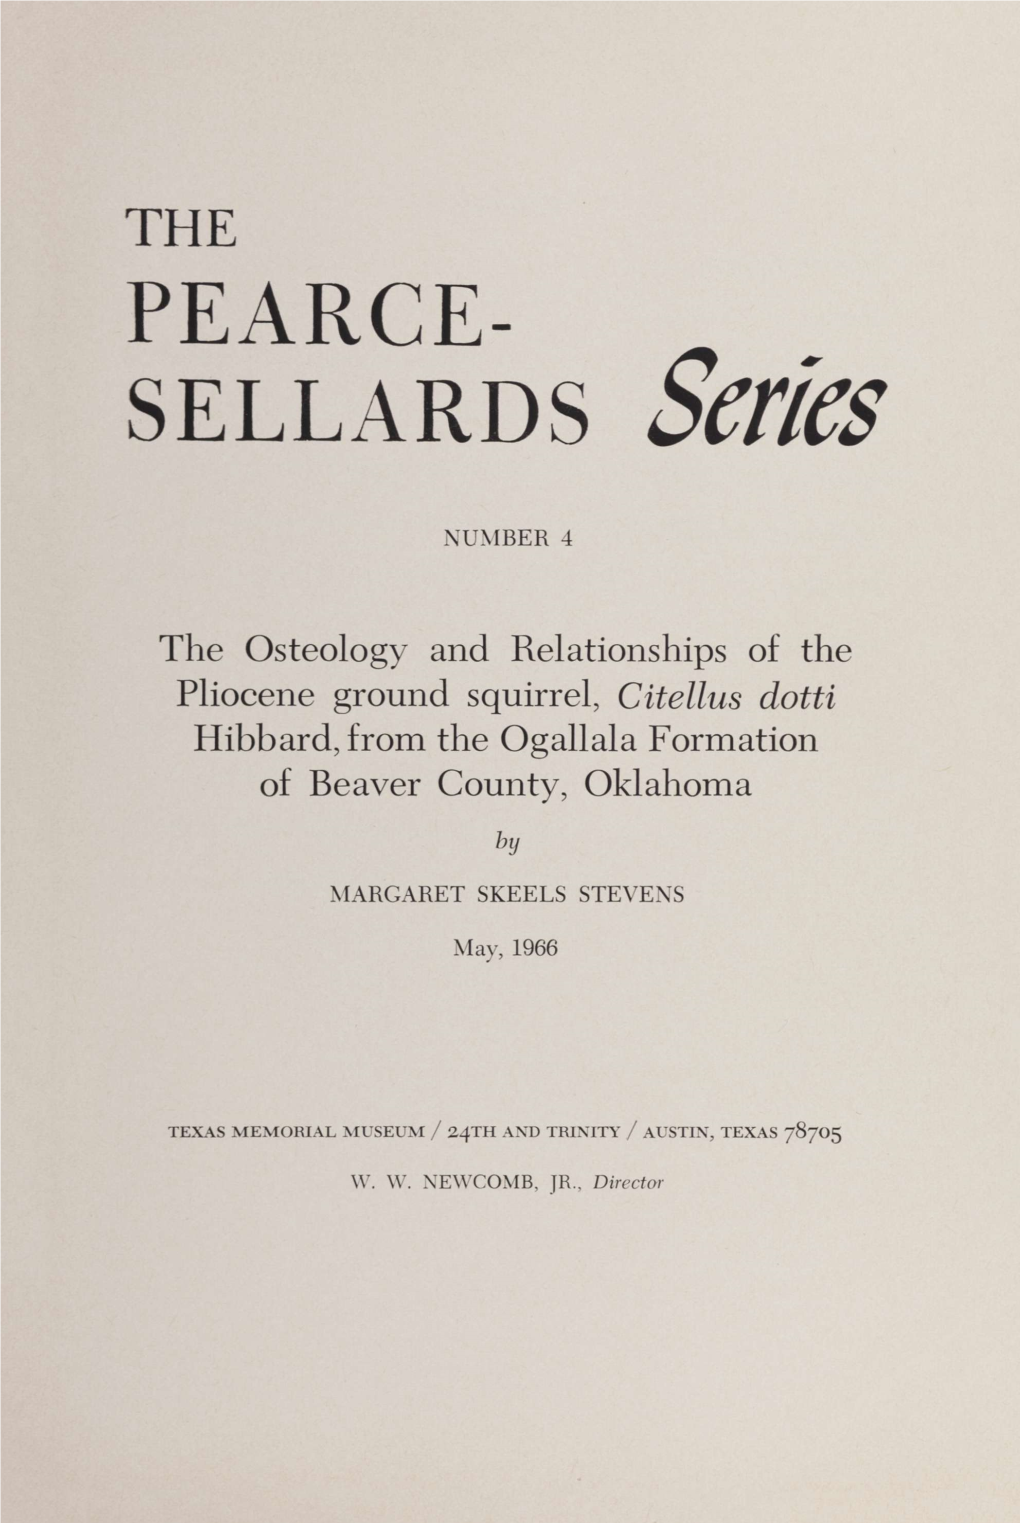 PEARCE- SELLARDS Series